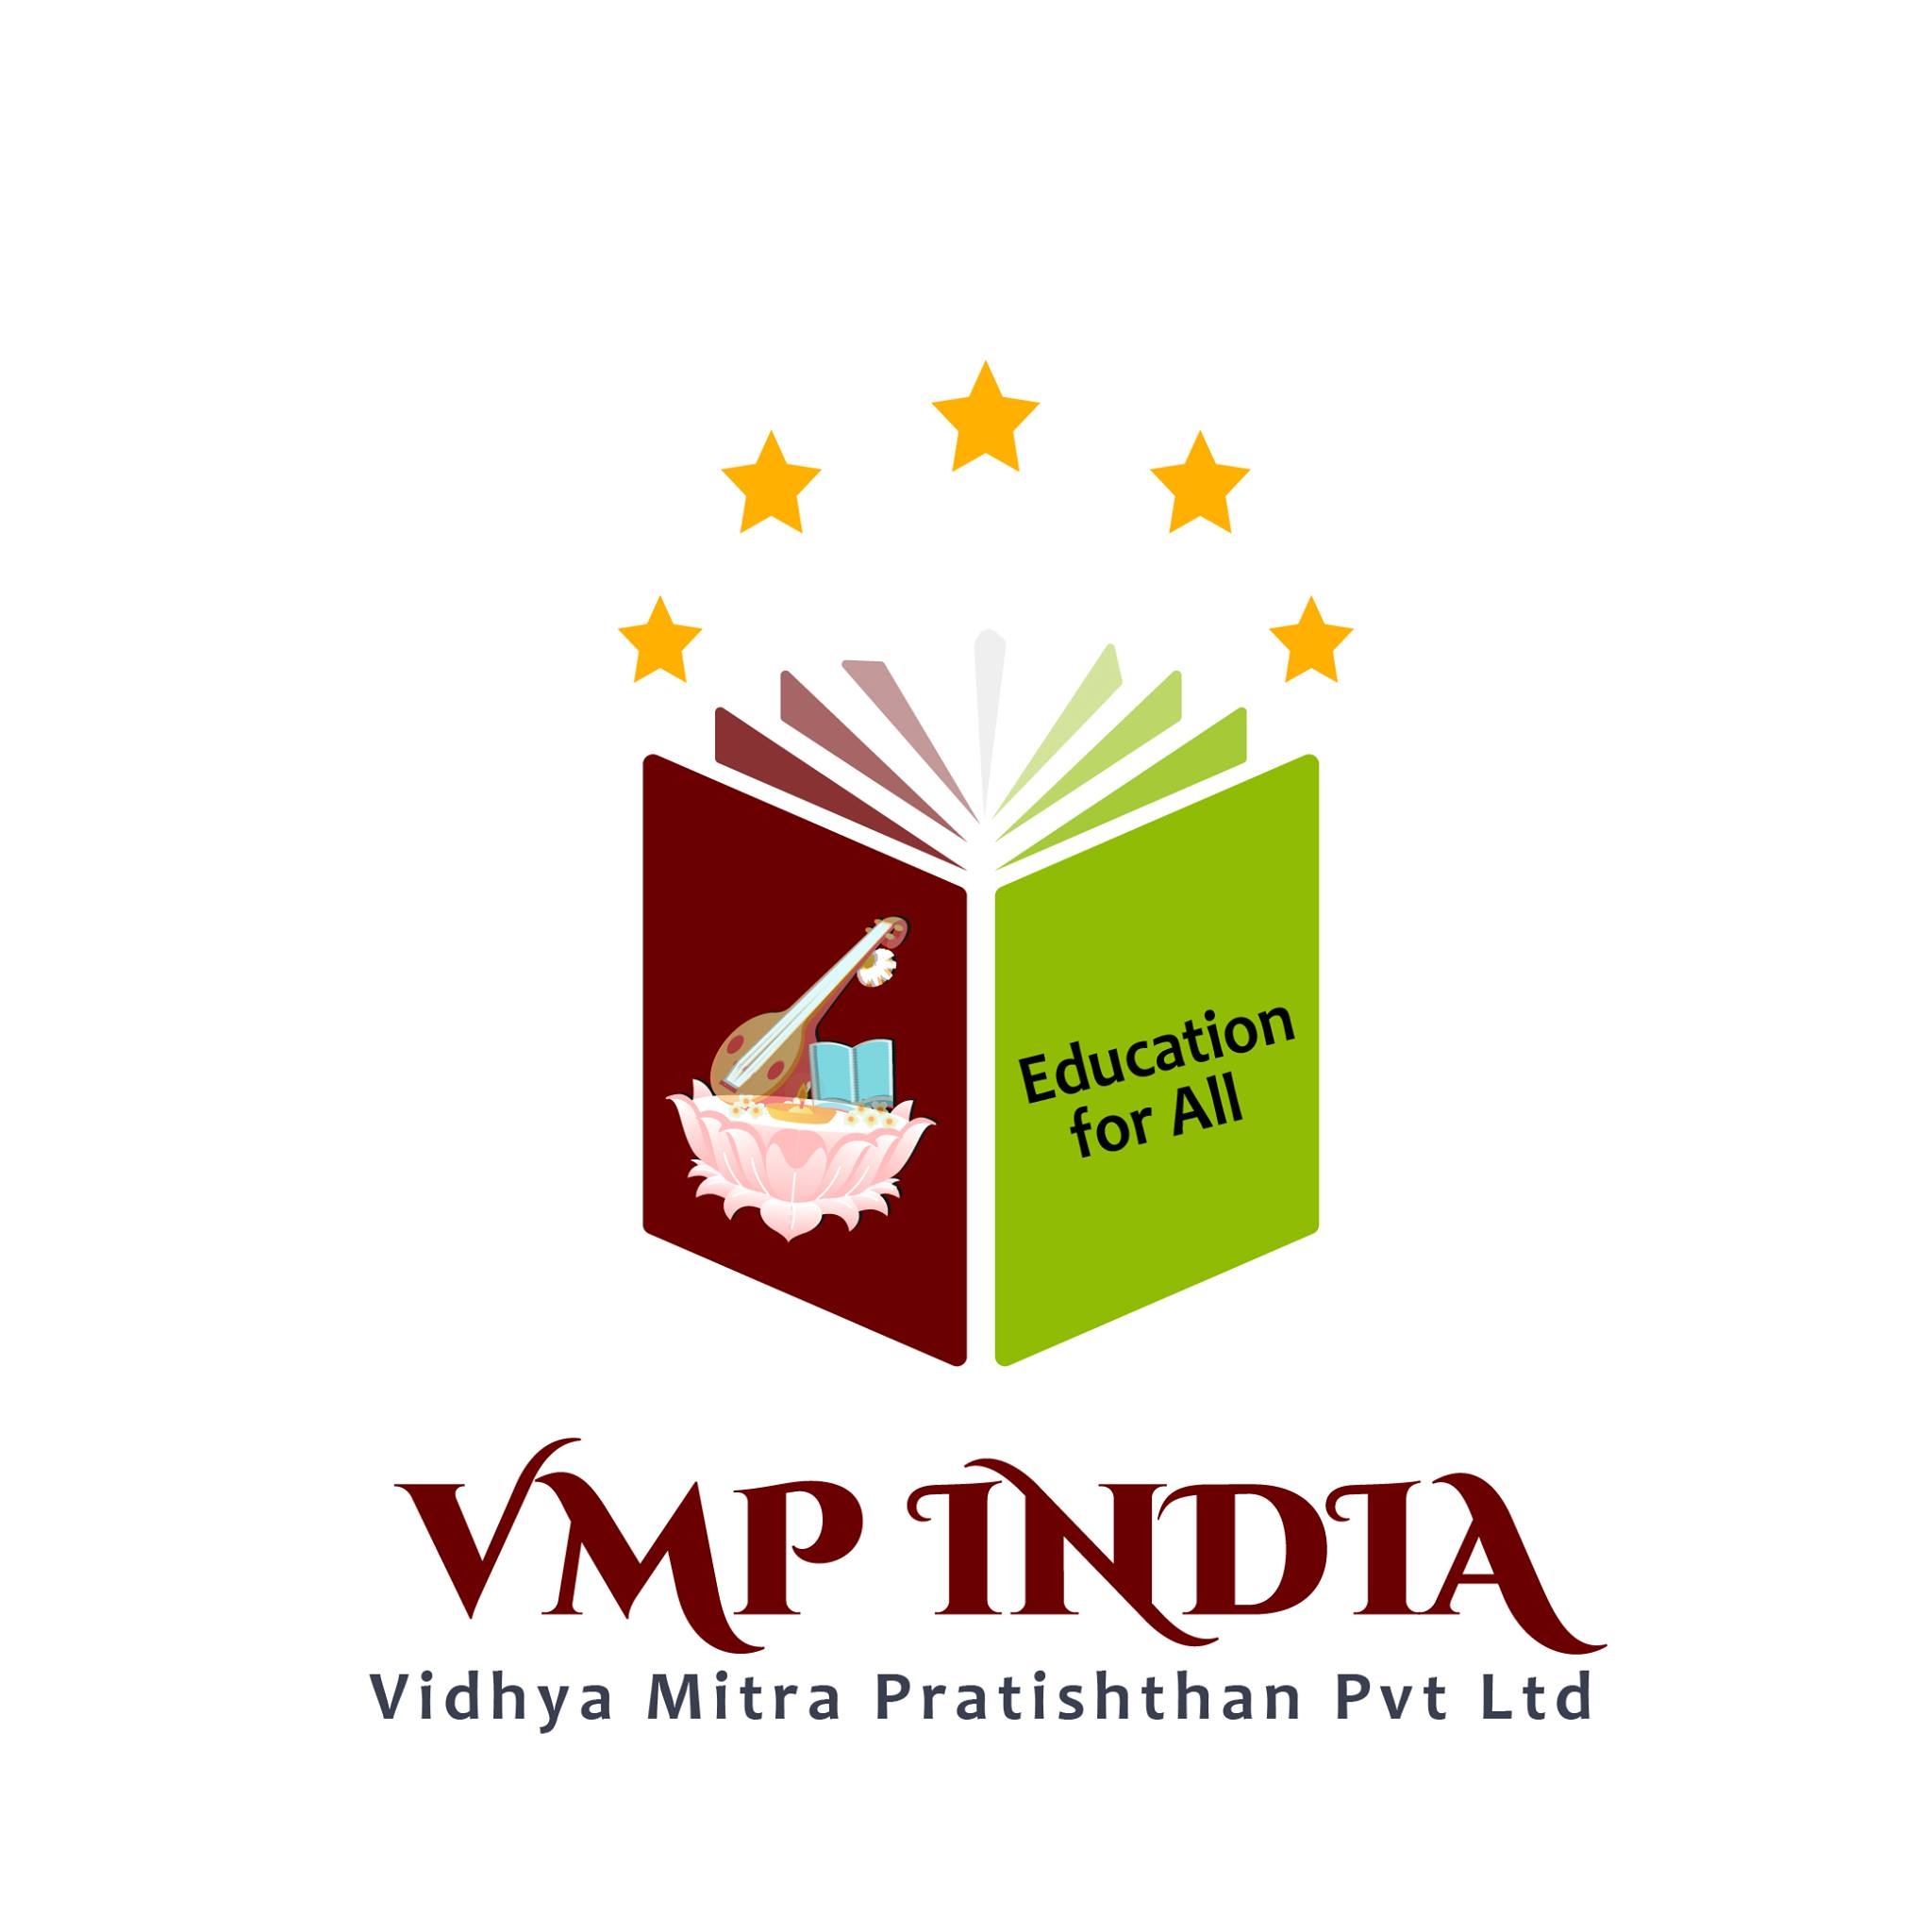 VMP INDIA - Vidhya Mitra Pratishthan, A CSR Project Management Company